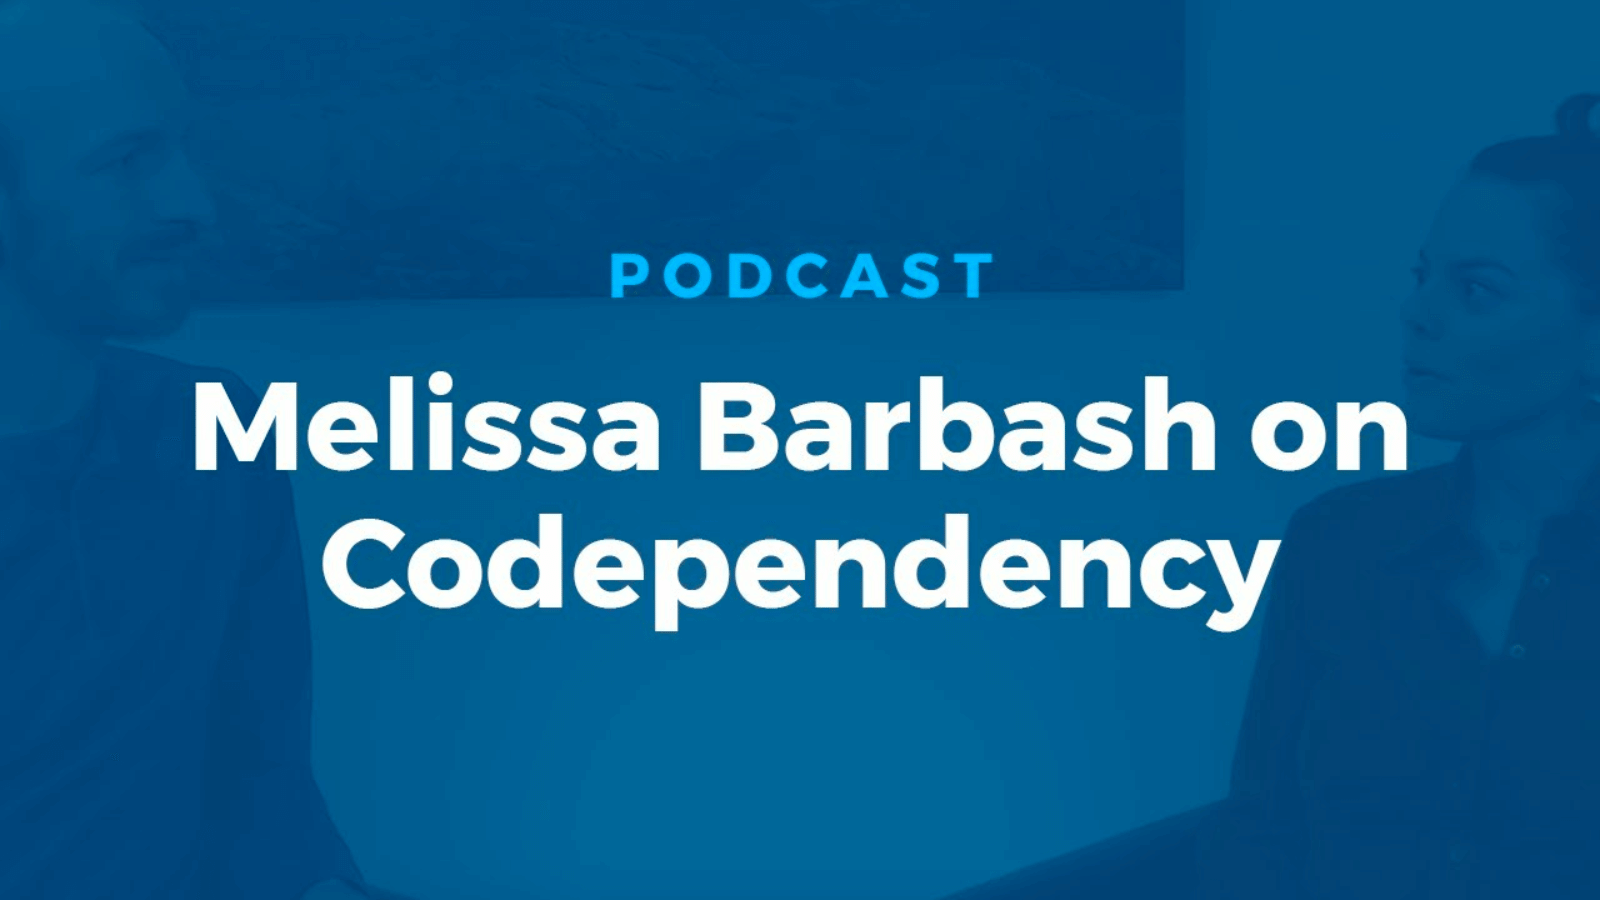 Melissa Barbash on Codependency